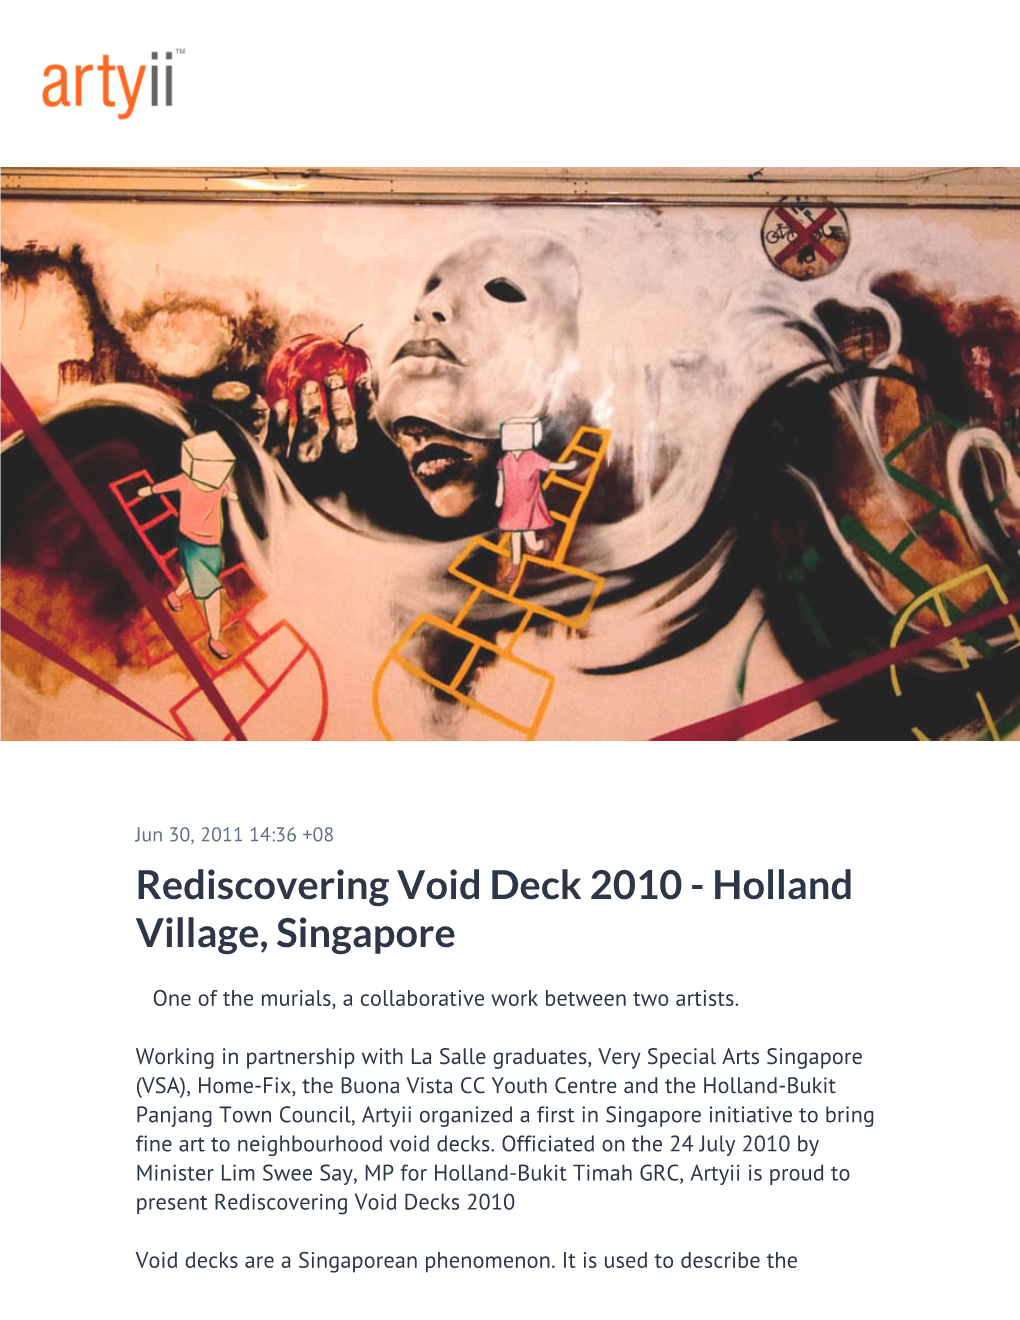 Rediscovering Void Deck 2010 - Holland Village, Singapore